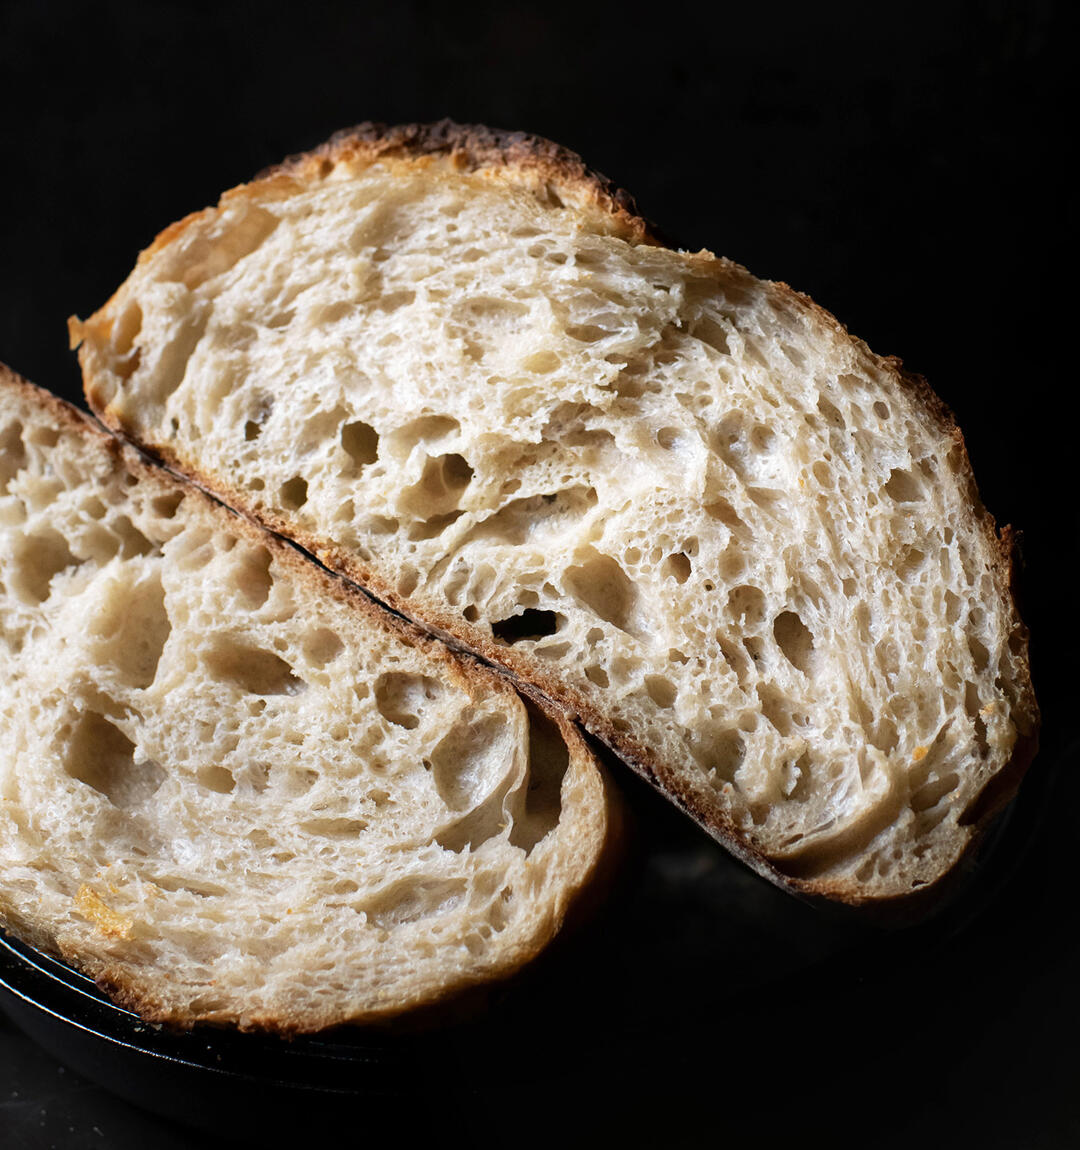 Naturally-leavened sourdough bread cut in half.